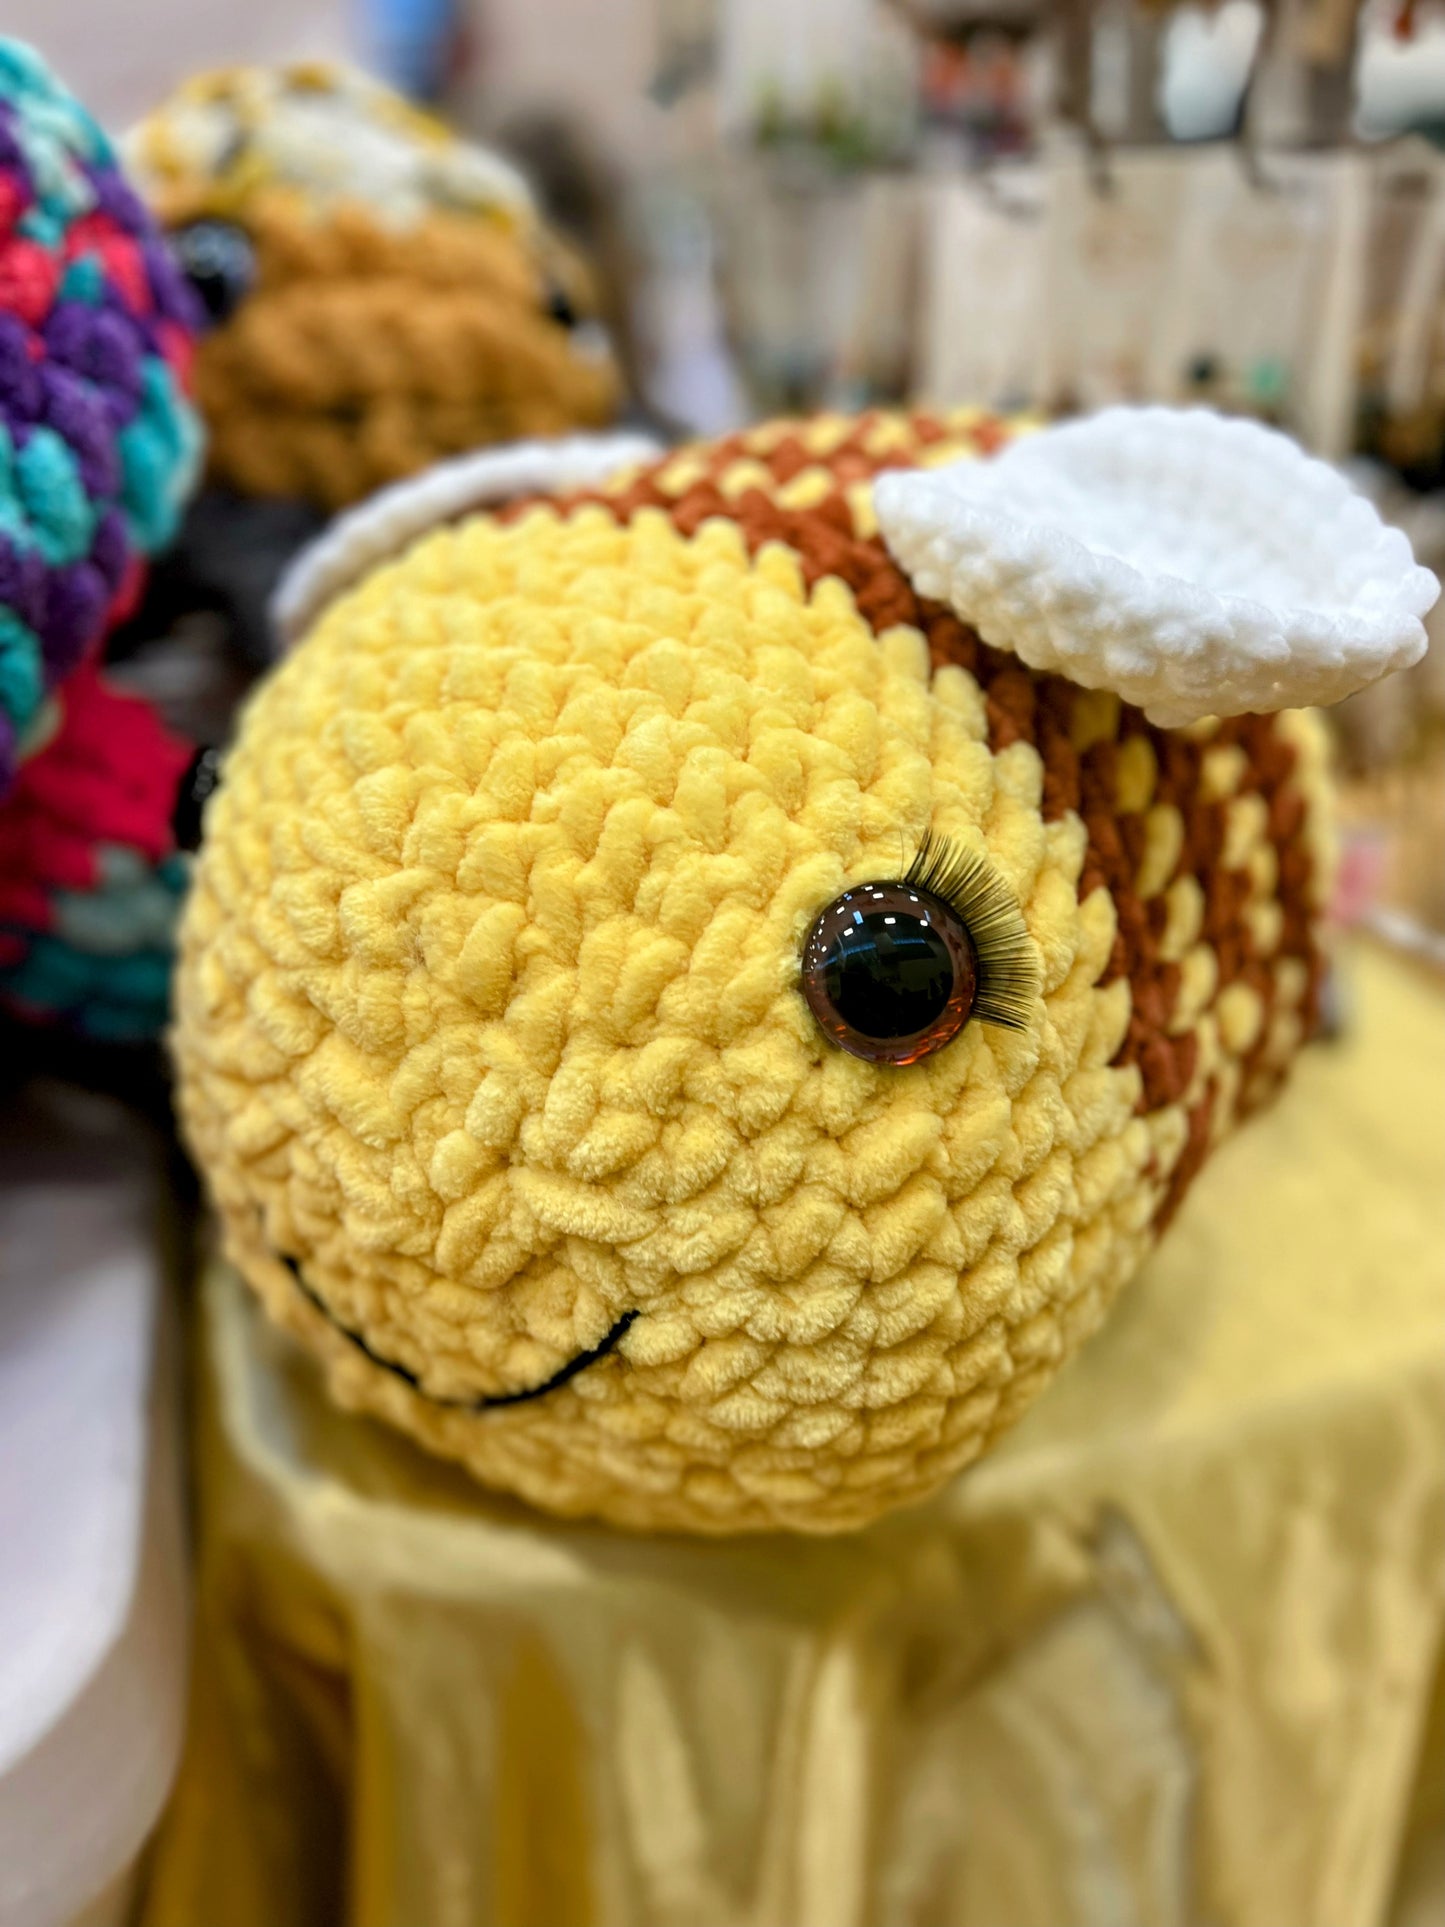 Cuddly Plushie Jumbo Bee 🐝- Crochet Knitted Amigurumi Toy